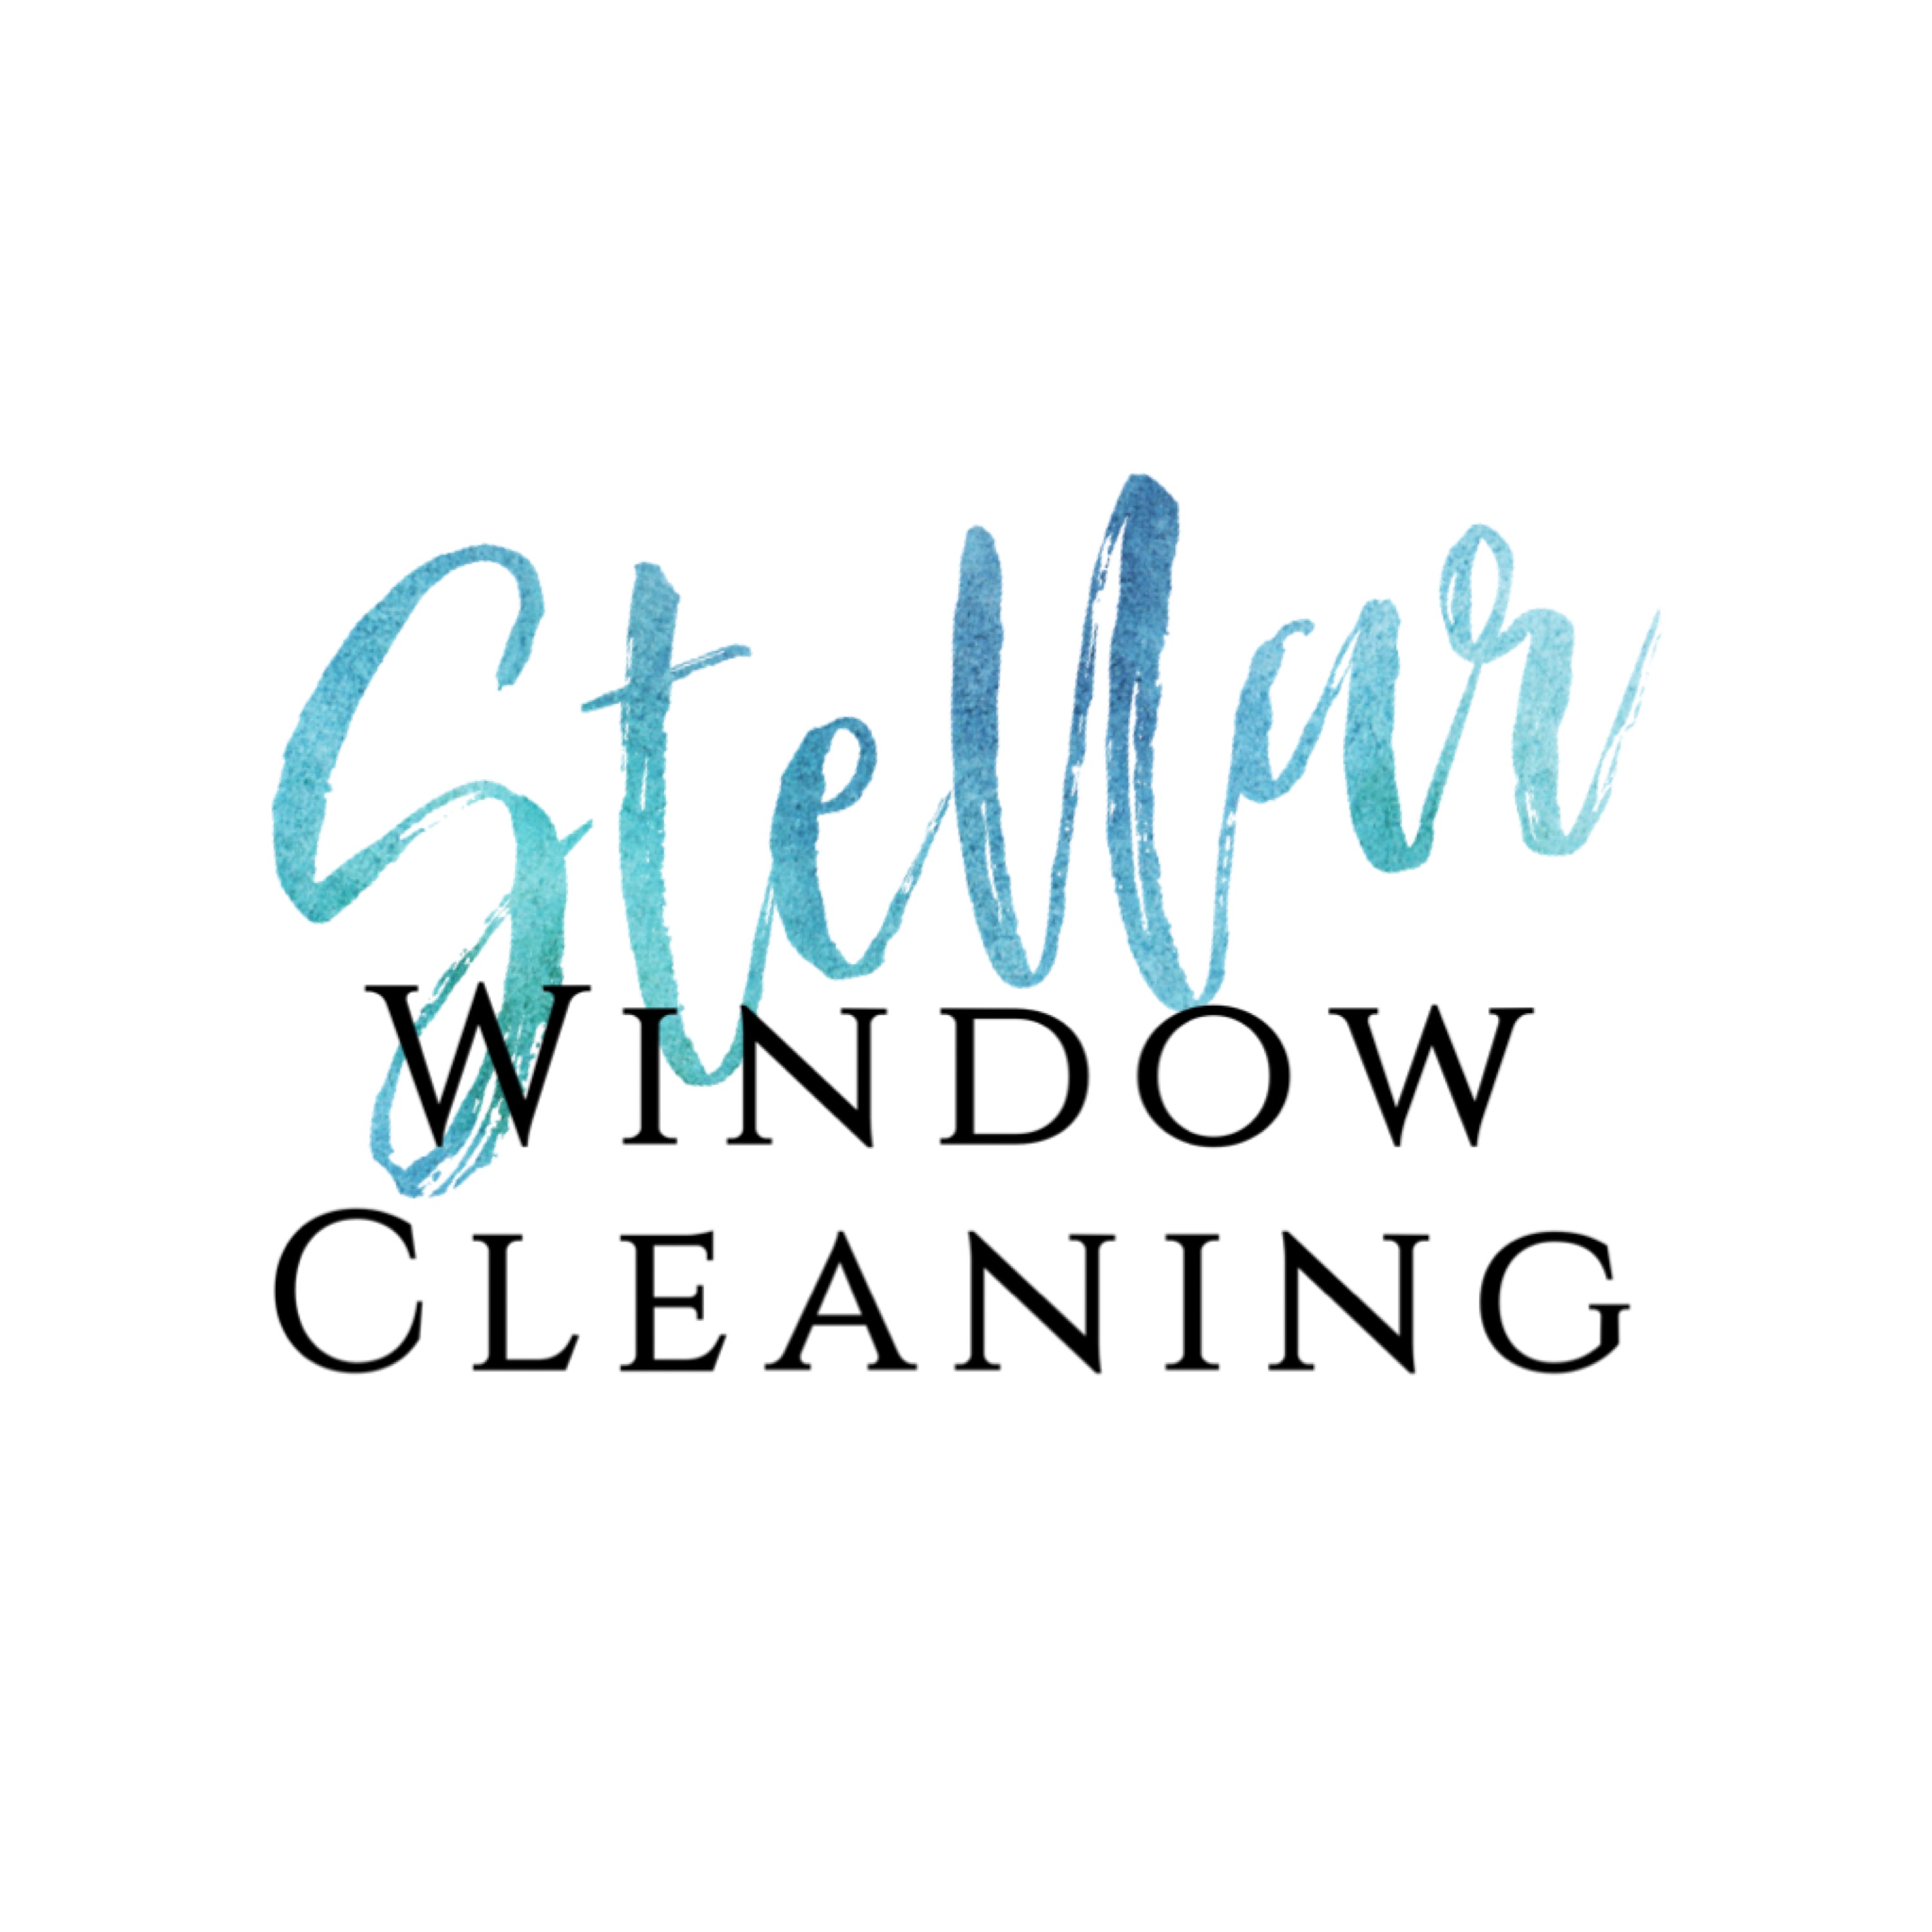 Stellar Window Cleaning Logo